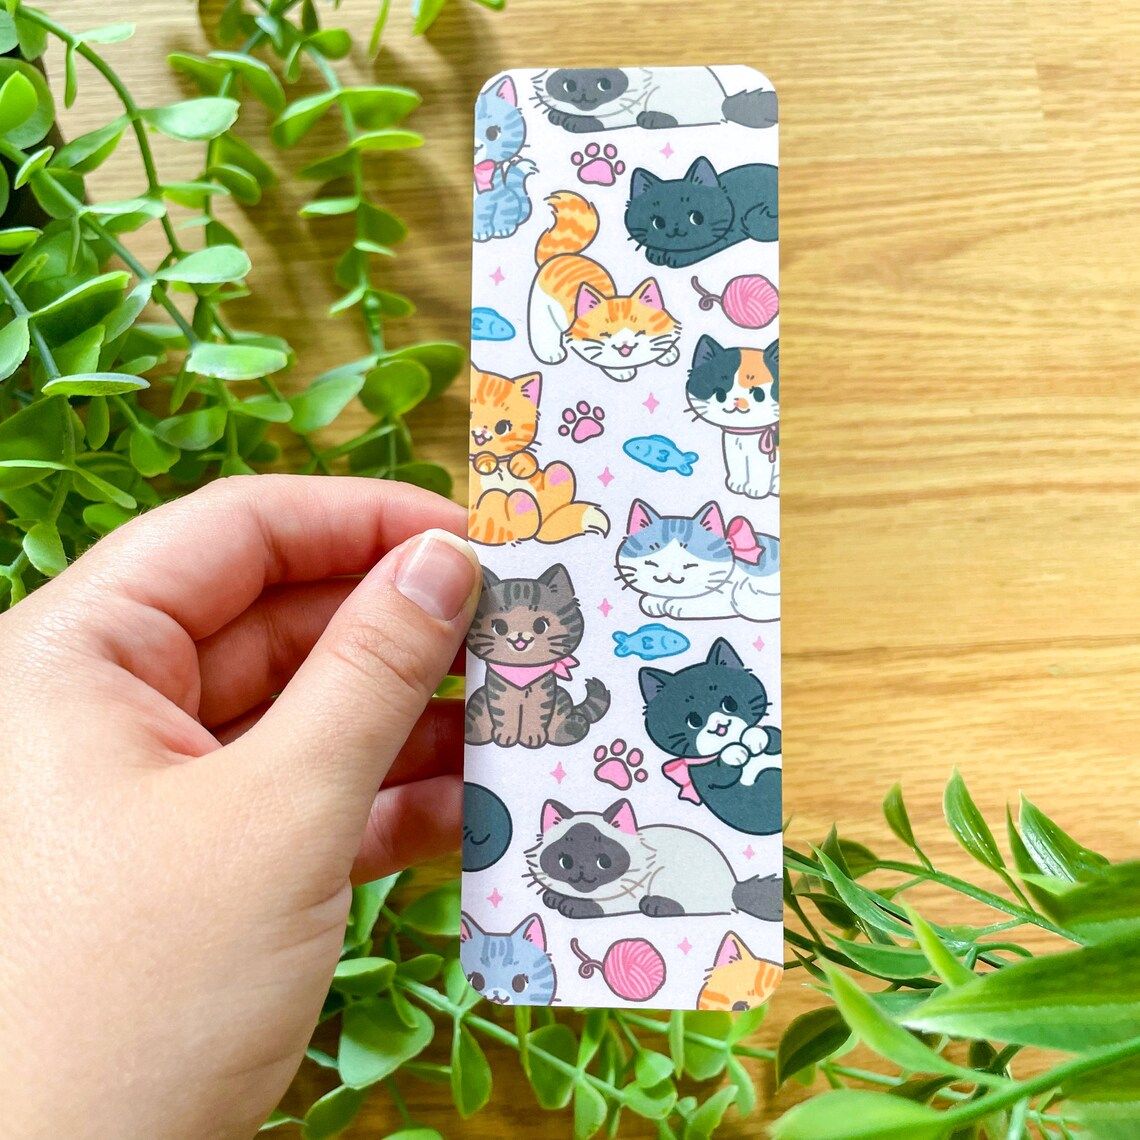 Kitty bookmarks by DrawnByNana